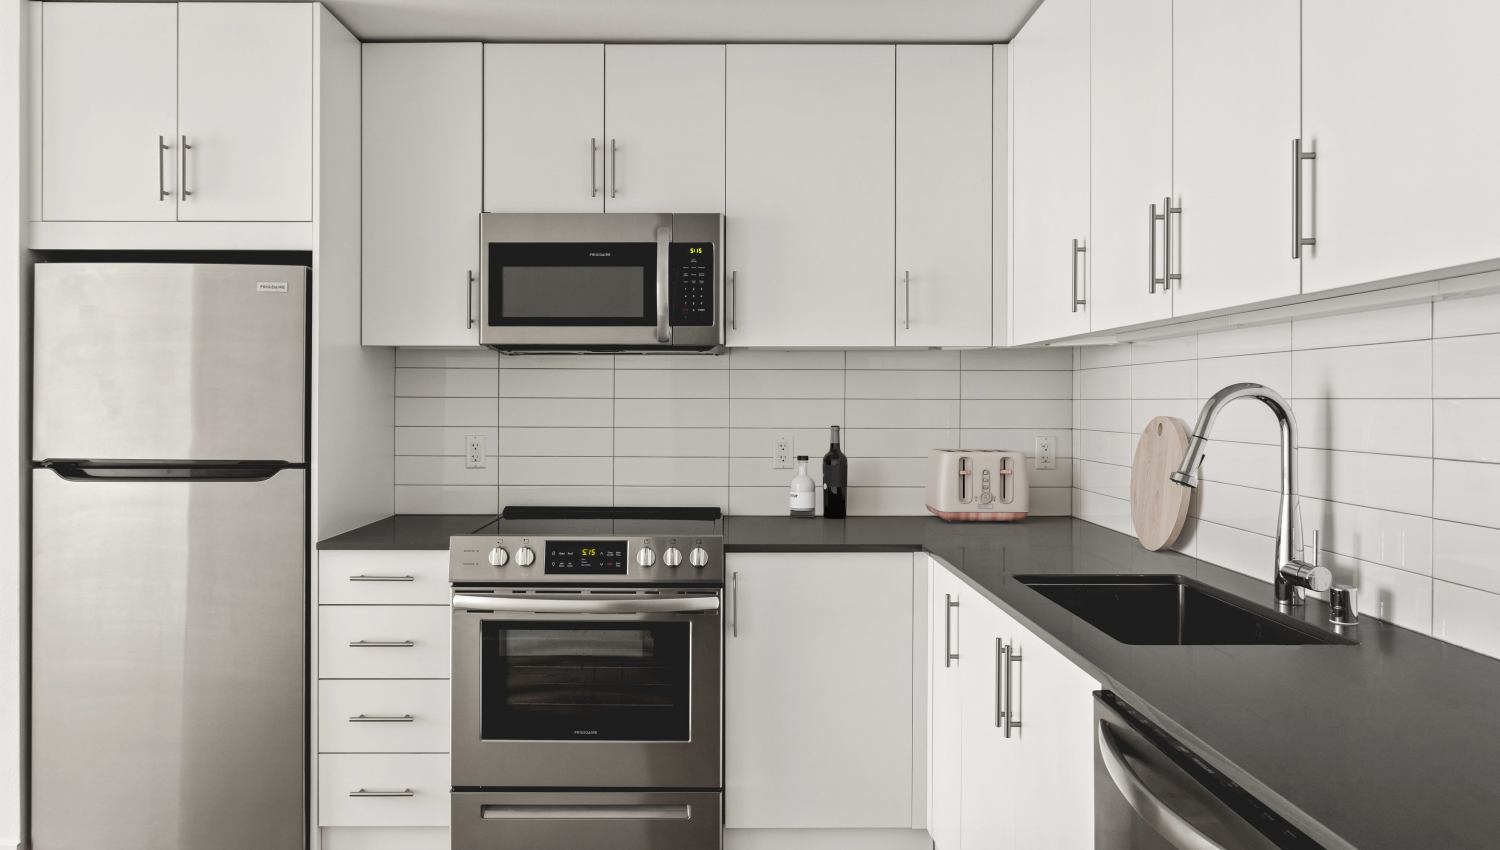 Modern kitchen with stainless-steel appliances at Helm in Everett, Washington